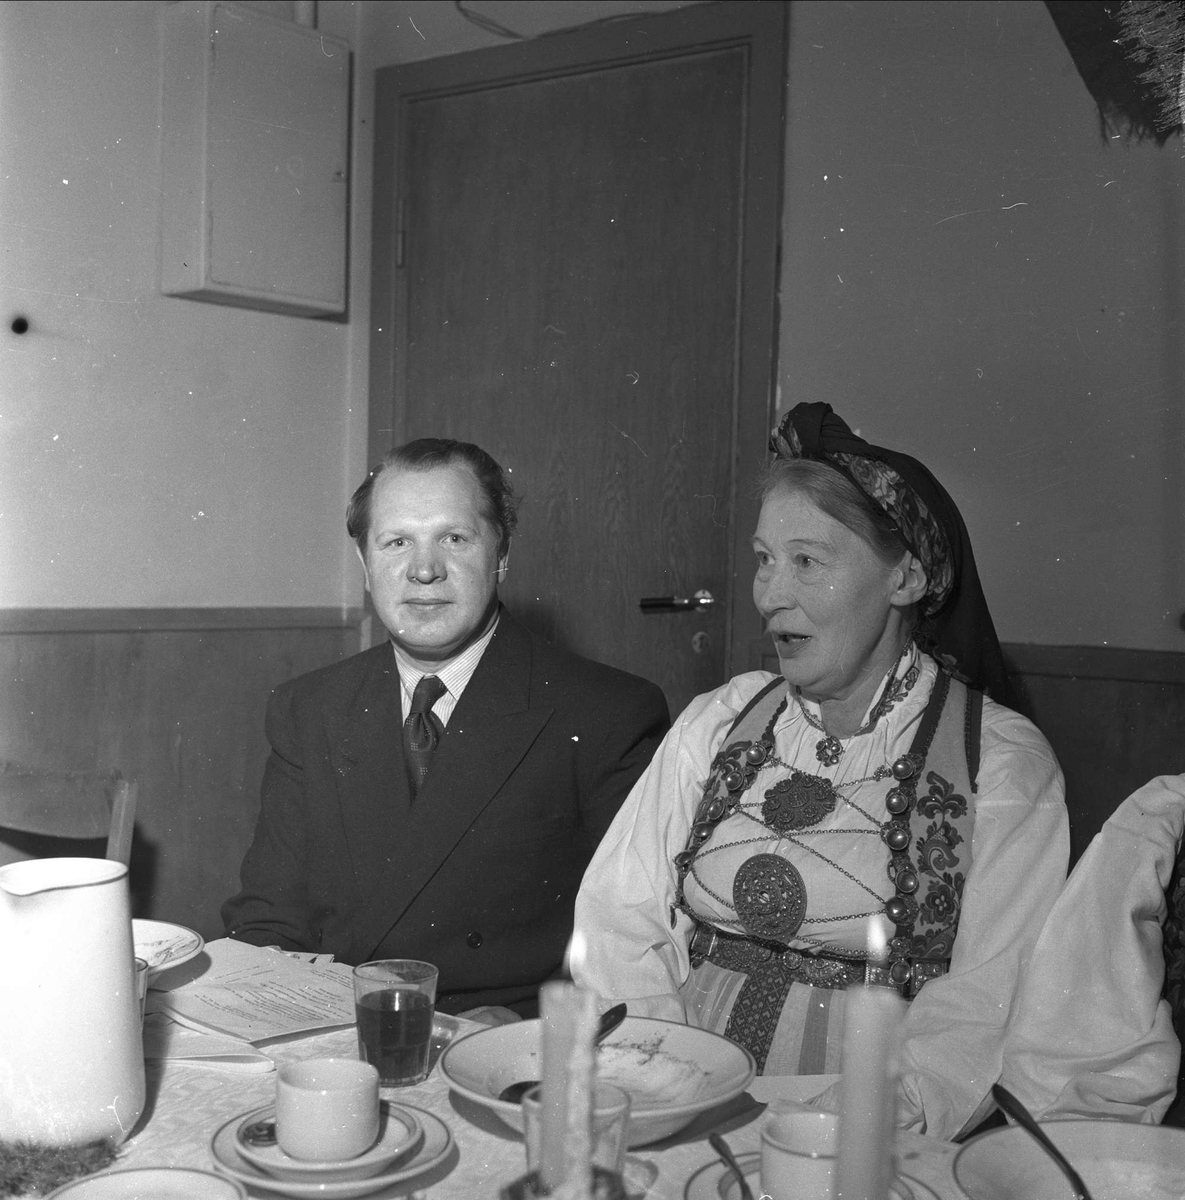 Mennesker rundt matbord. 23.04.1953. Bygdelag, Telelagets jubileum.